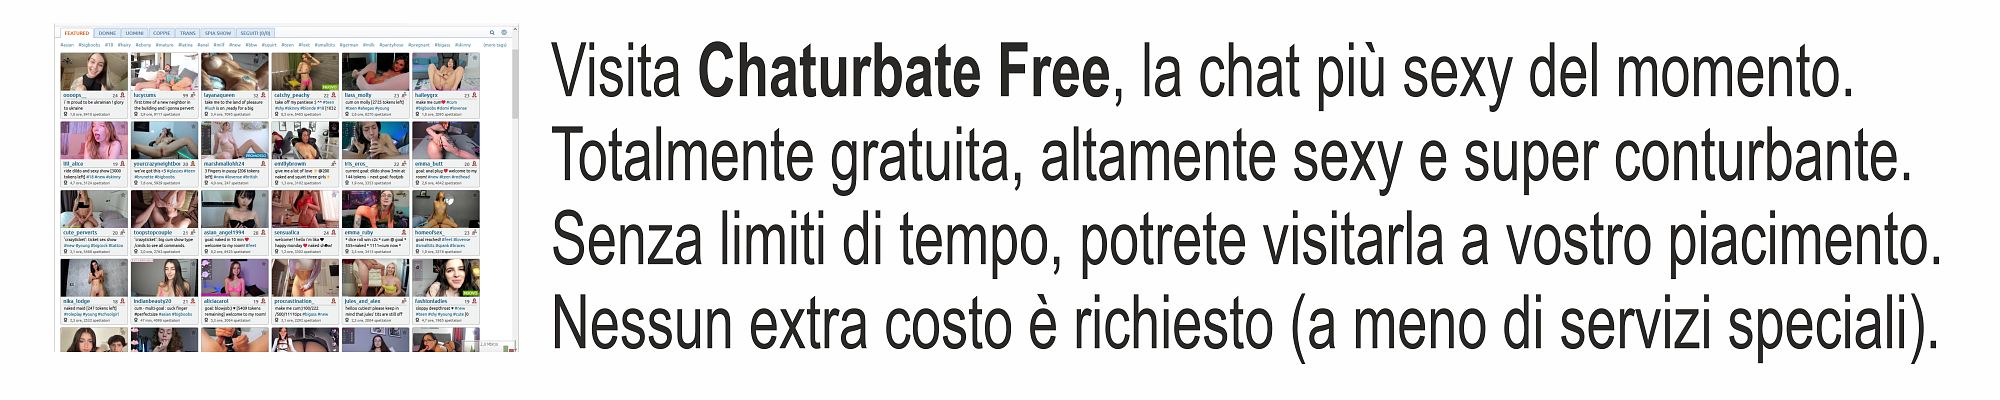 Chaturbate Free